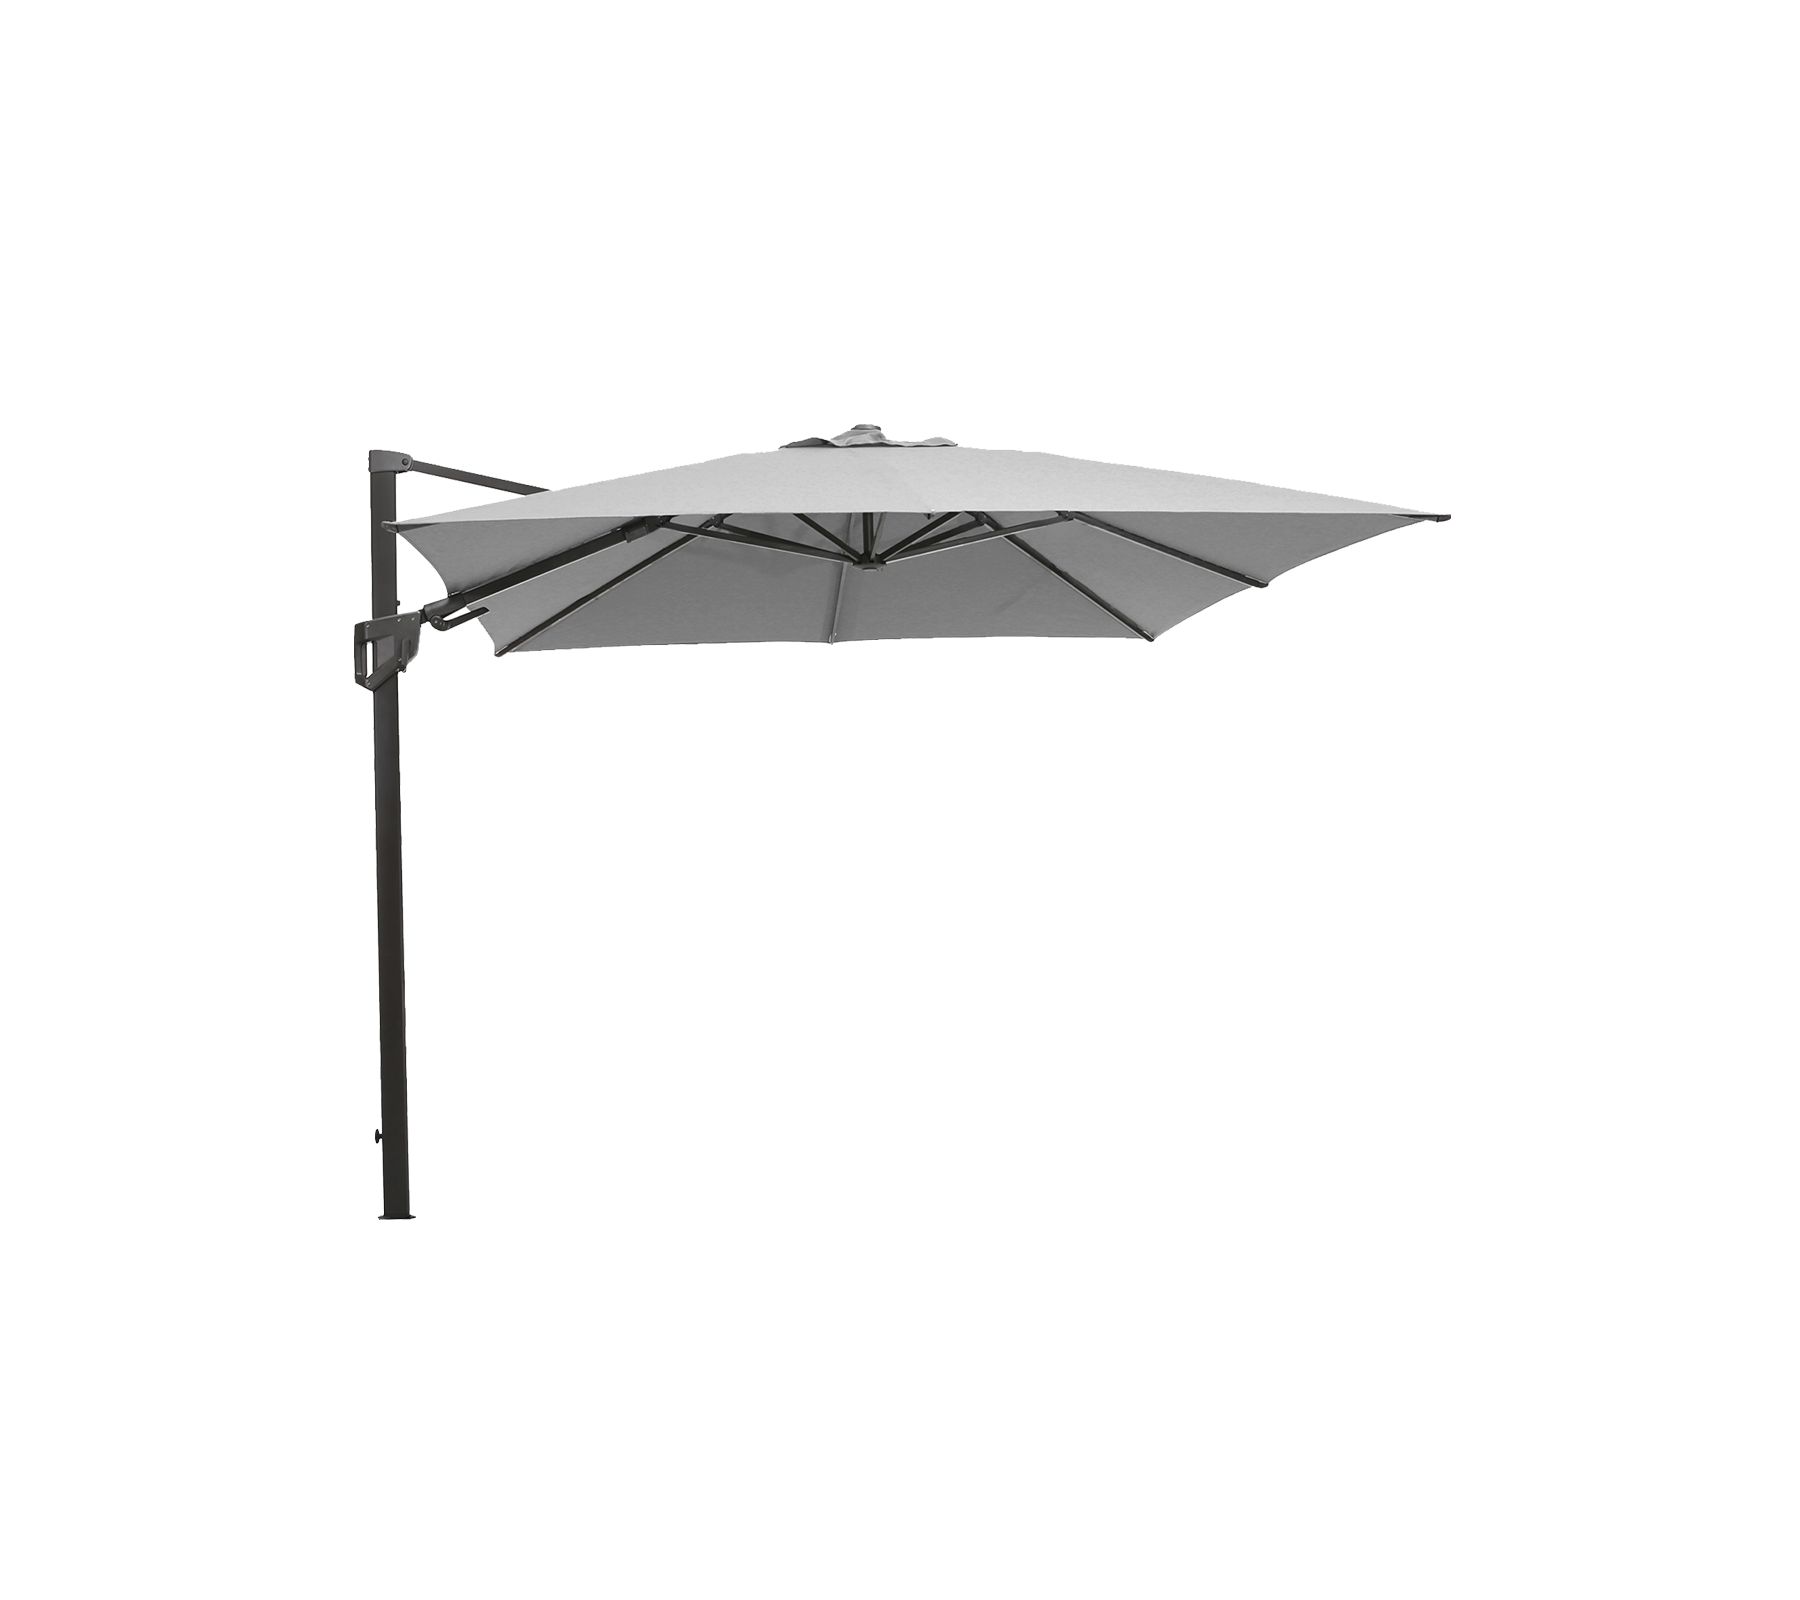 Cane-line Hyde luxe tilt parasol, 3x3 m - see selection –